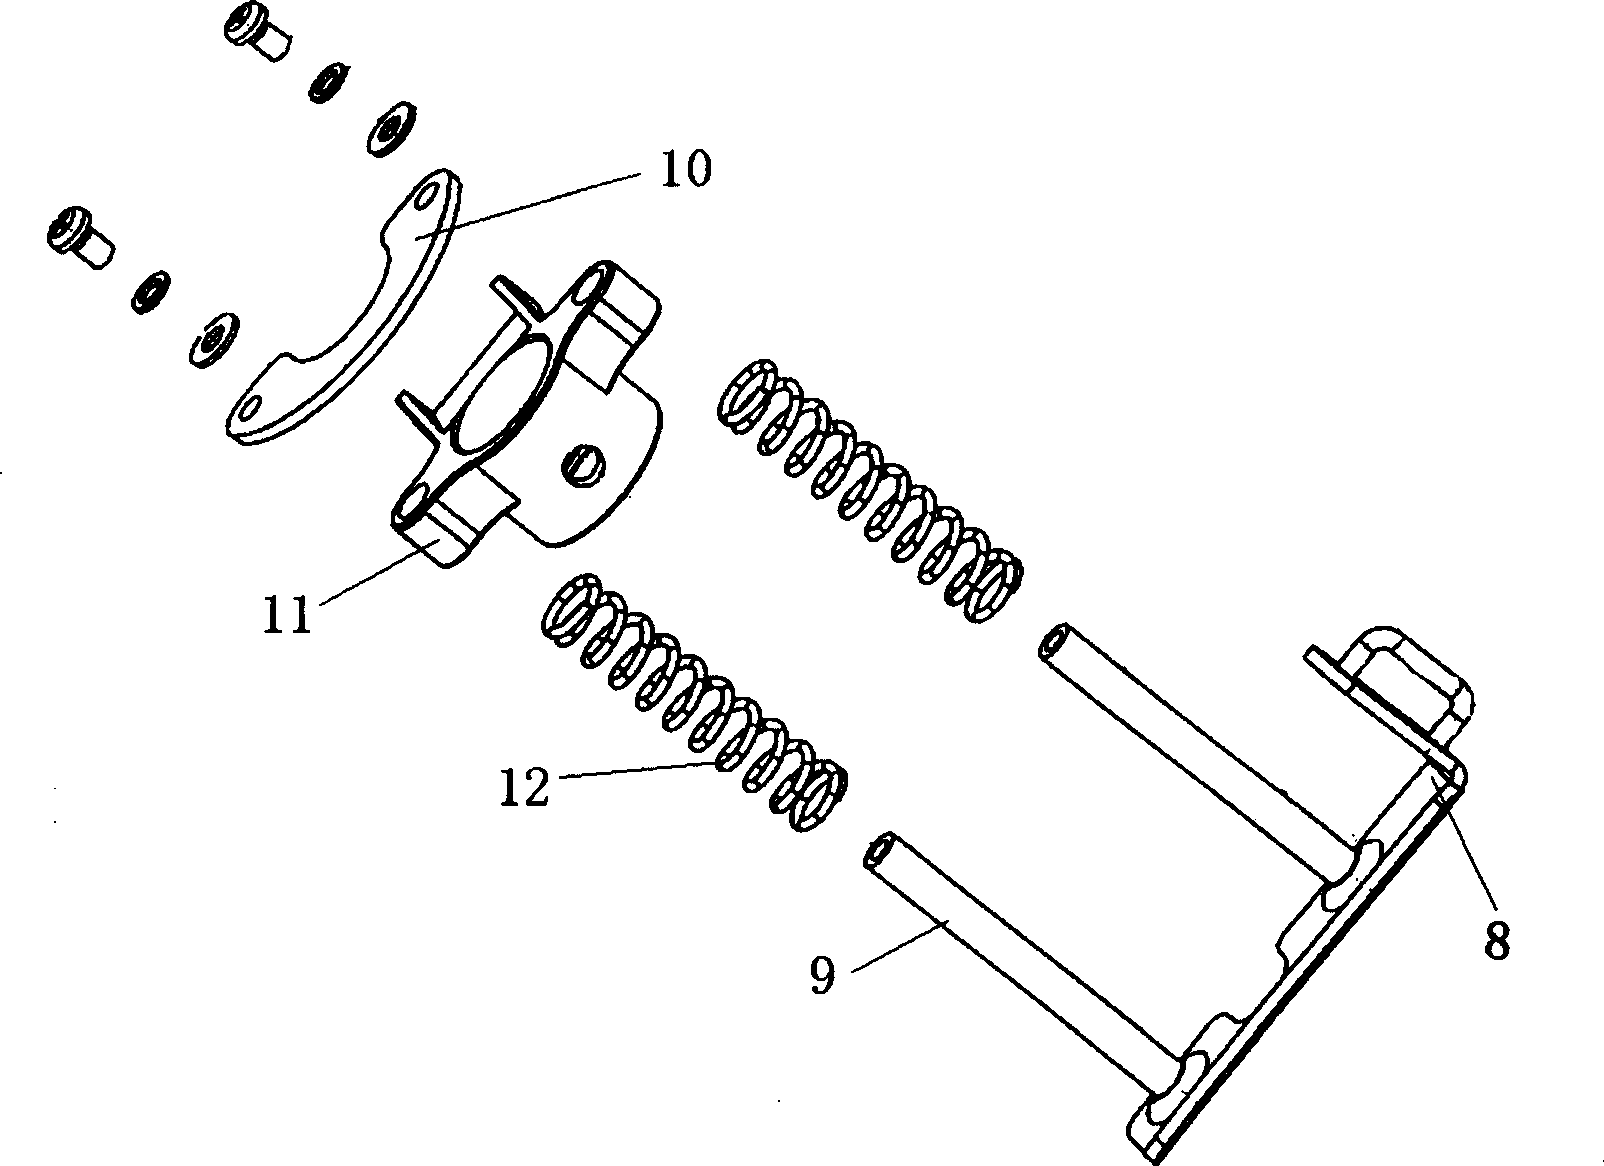 Hand-operated binder